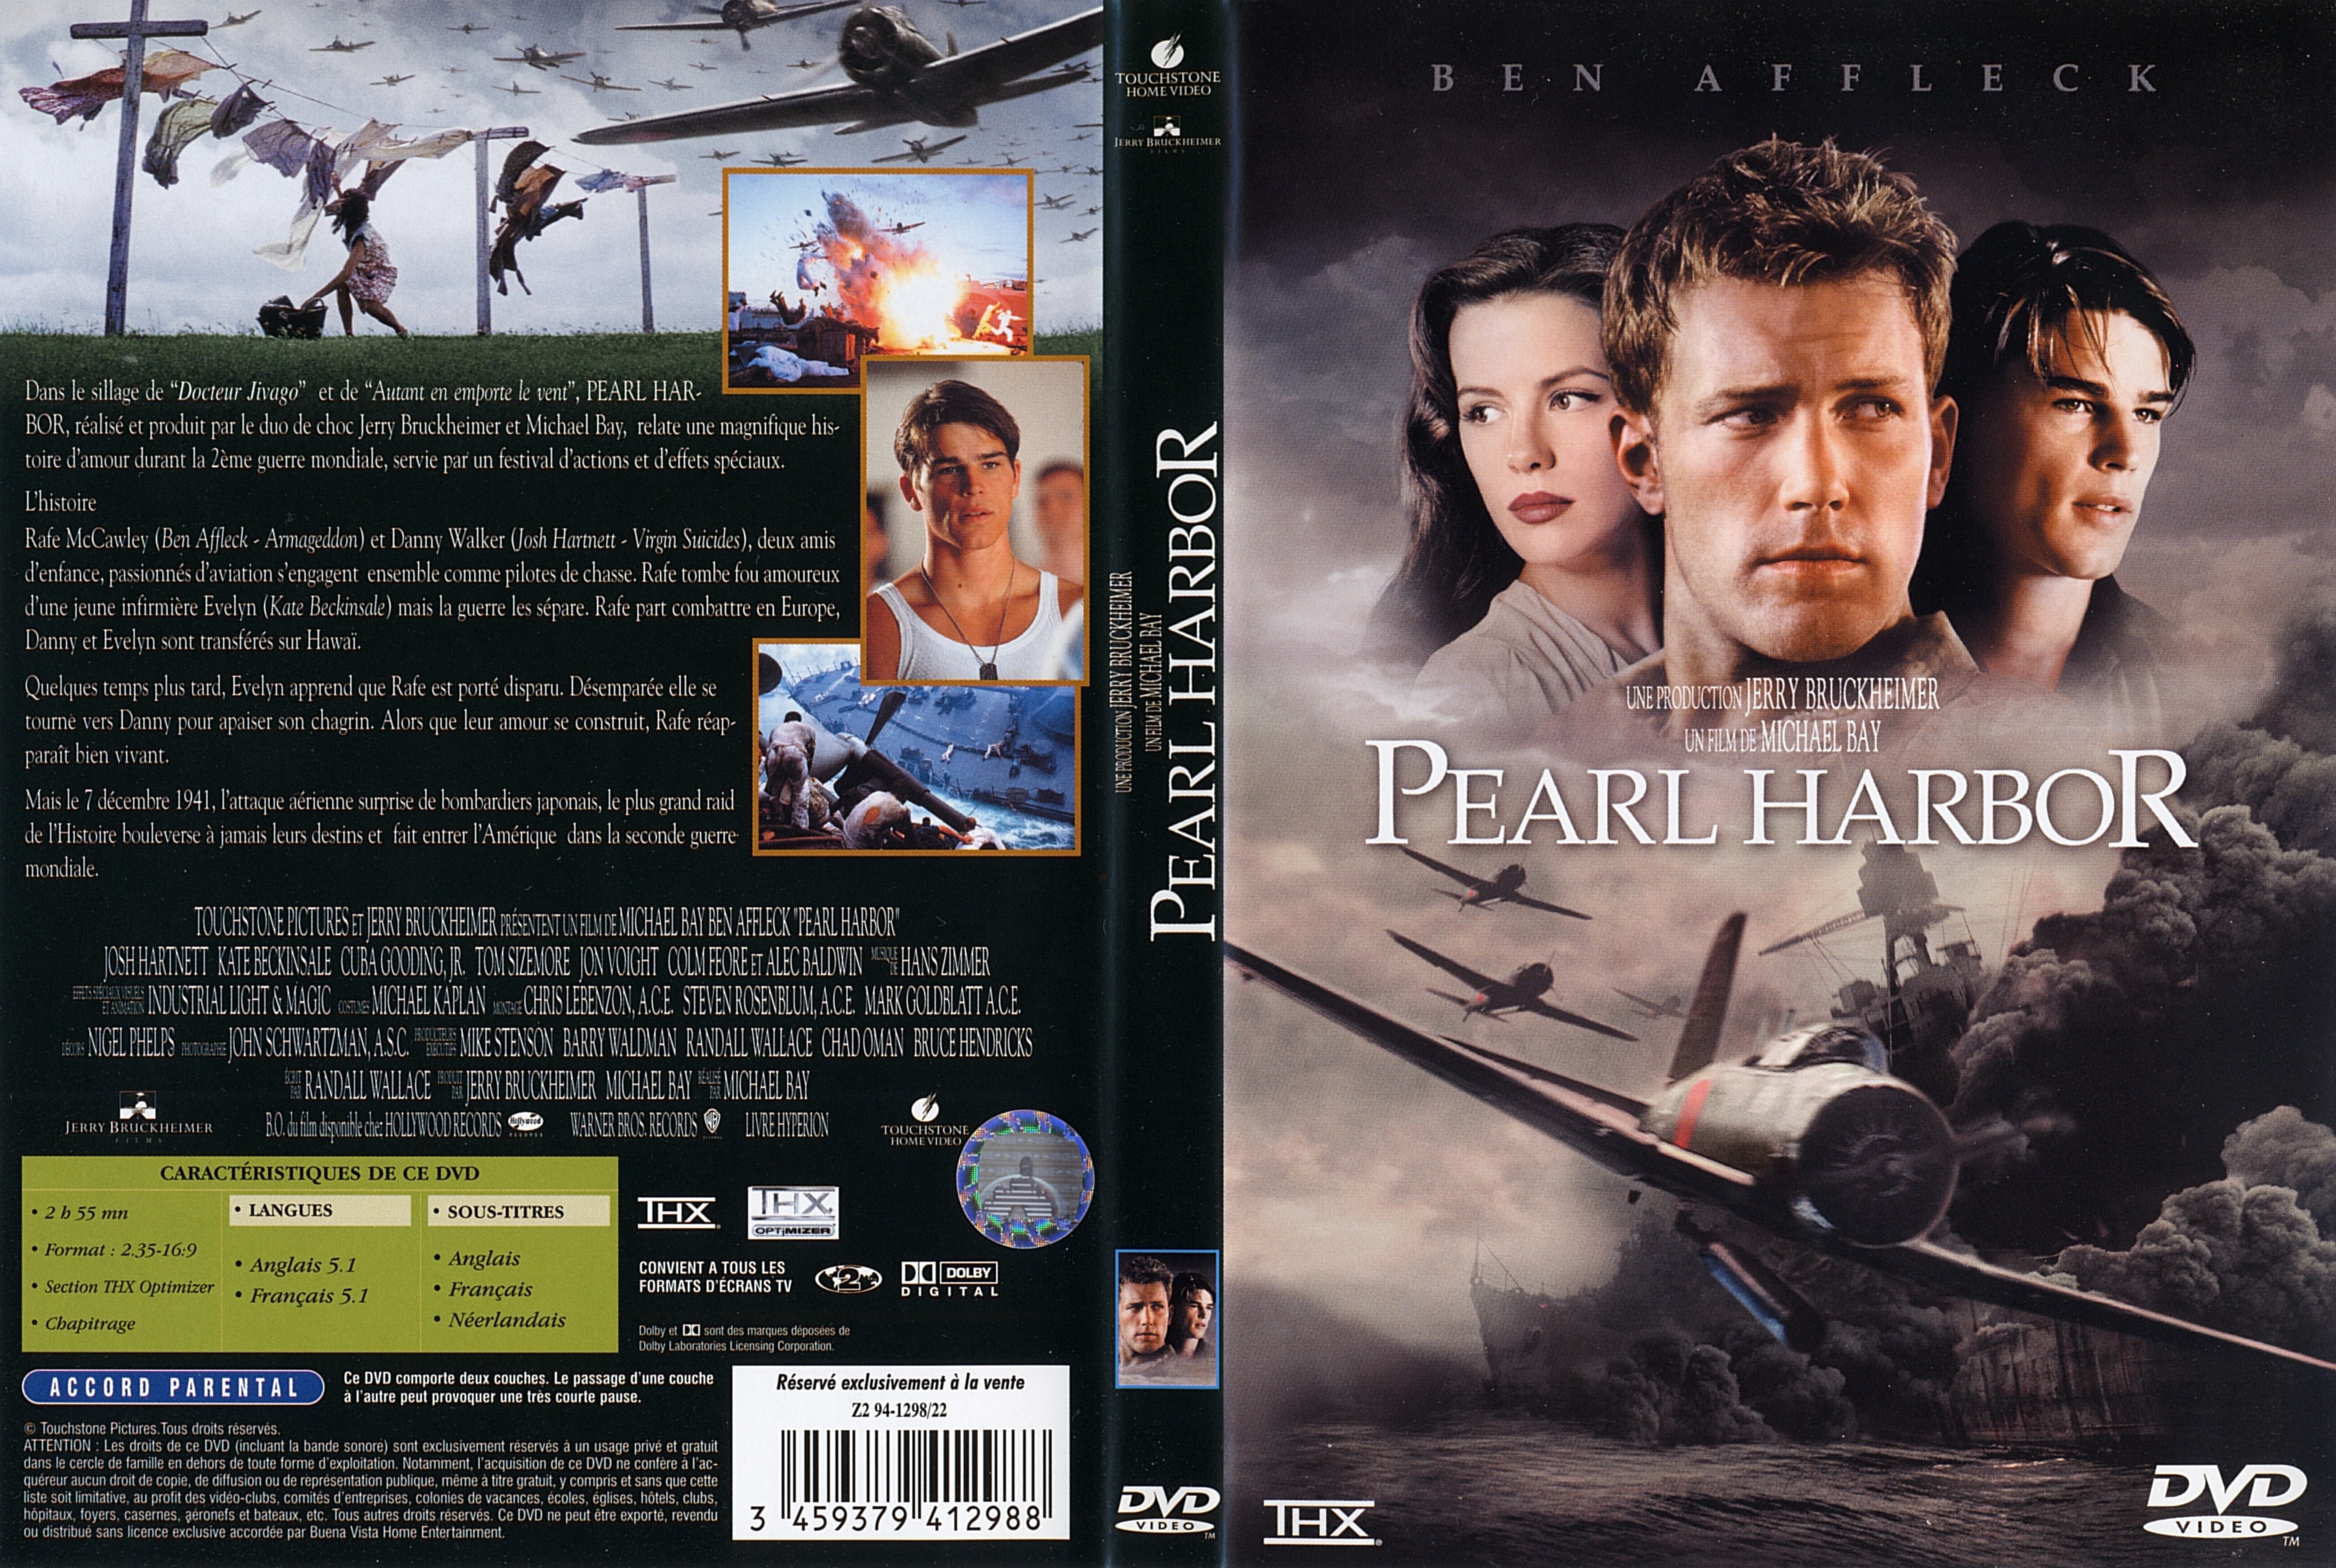 Jaquette DVD Pearl harbor